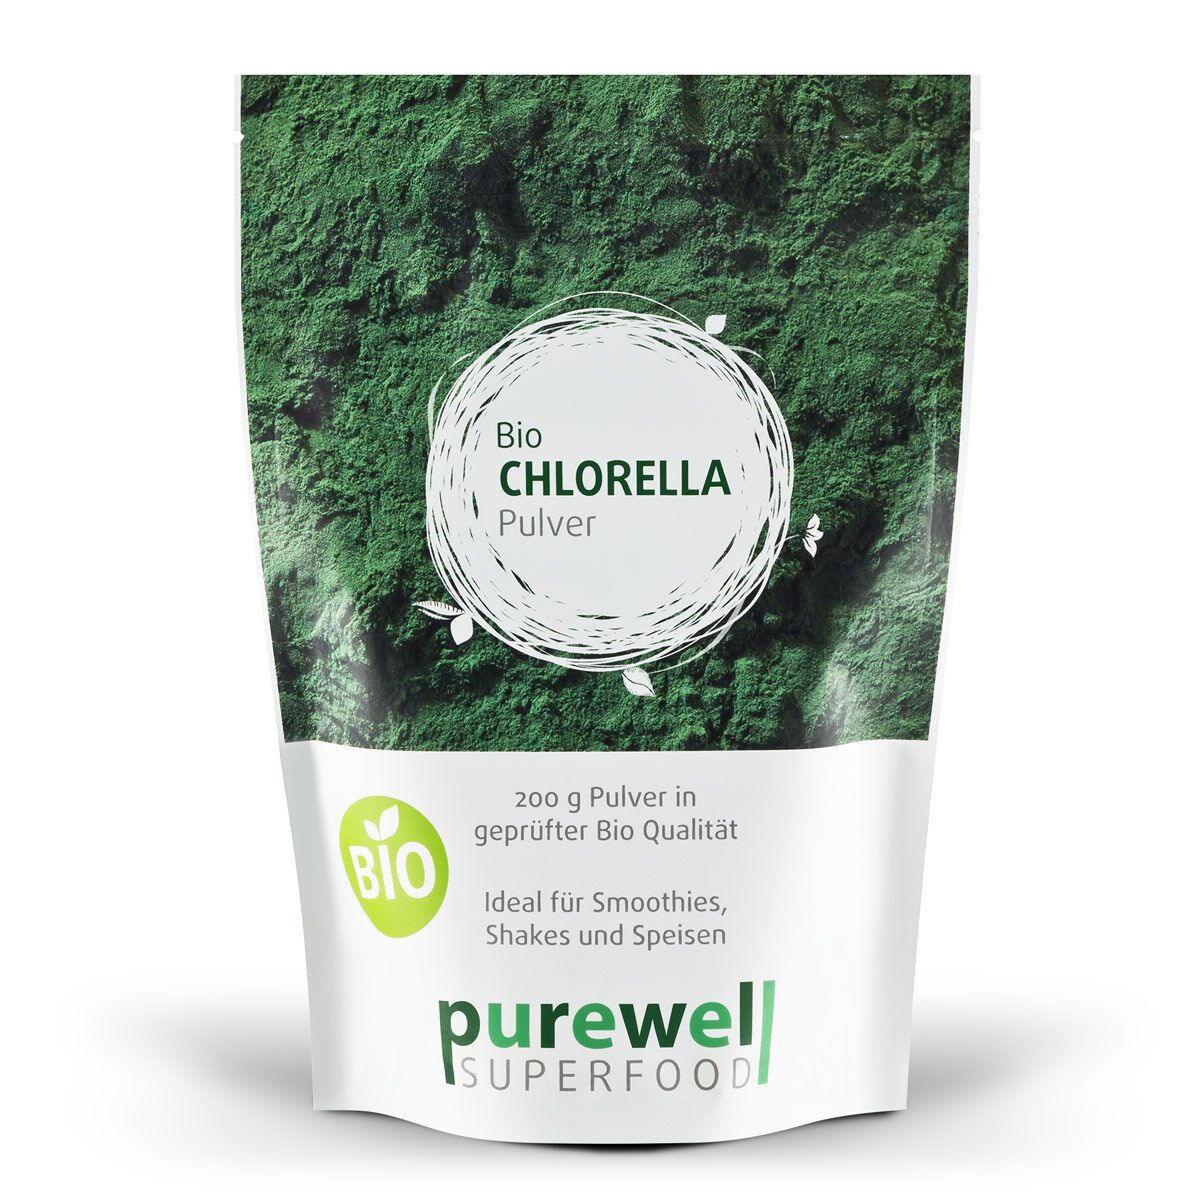 Image of purewell Superfood Bio Chlorella